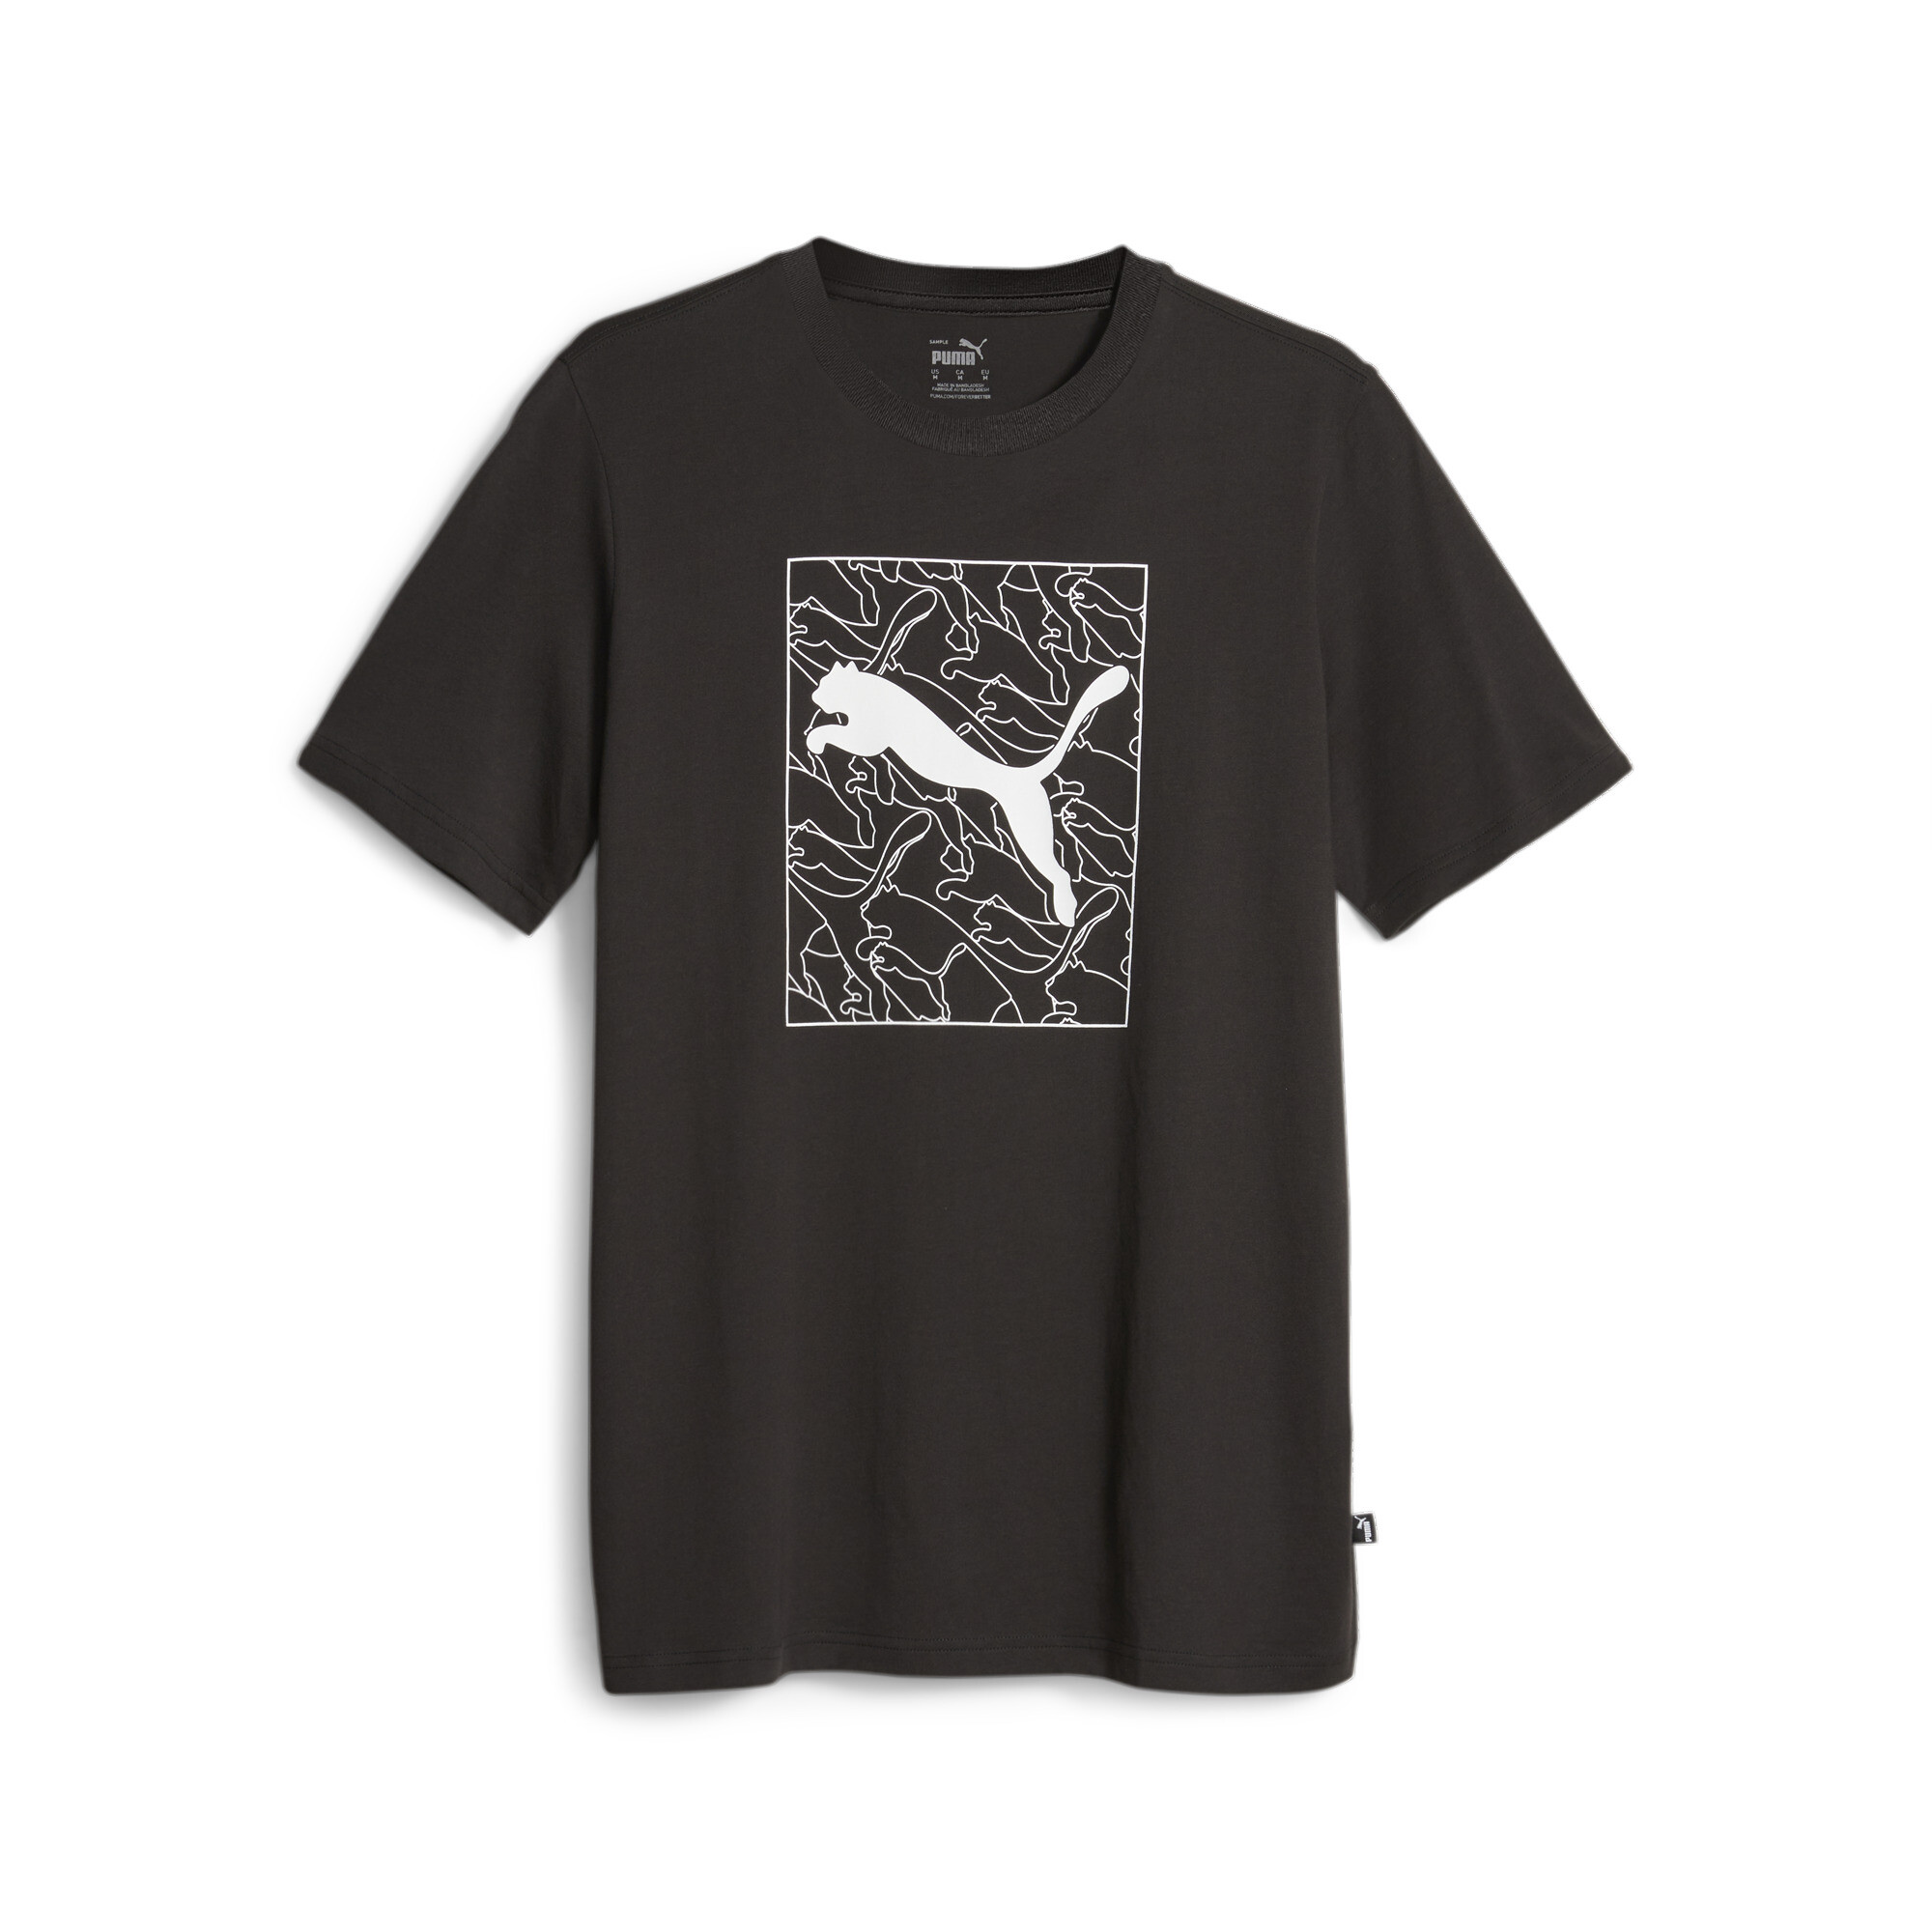 PUMA GRAPHICS Logo Print Short Sleeve Crew Neck Basic T-Shirt Tee Top ...